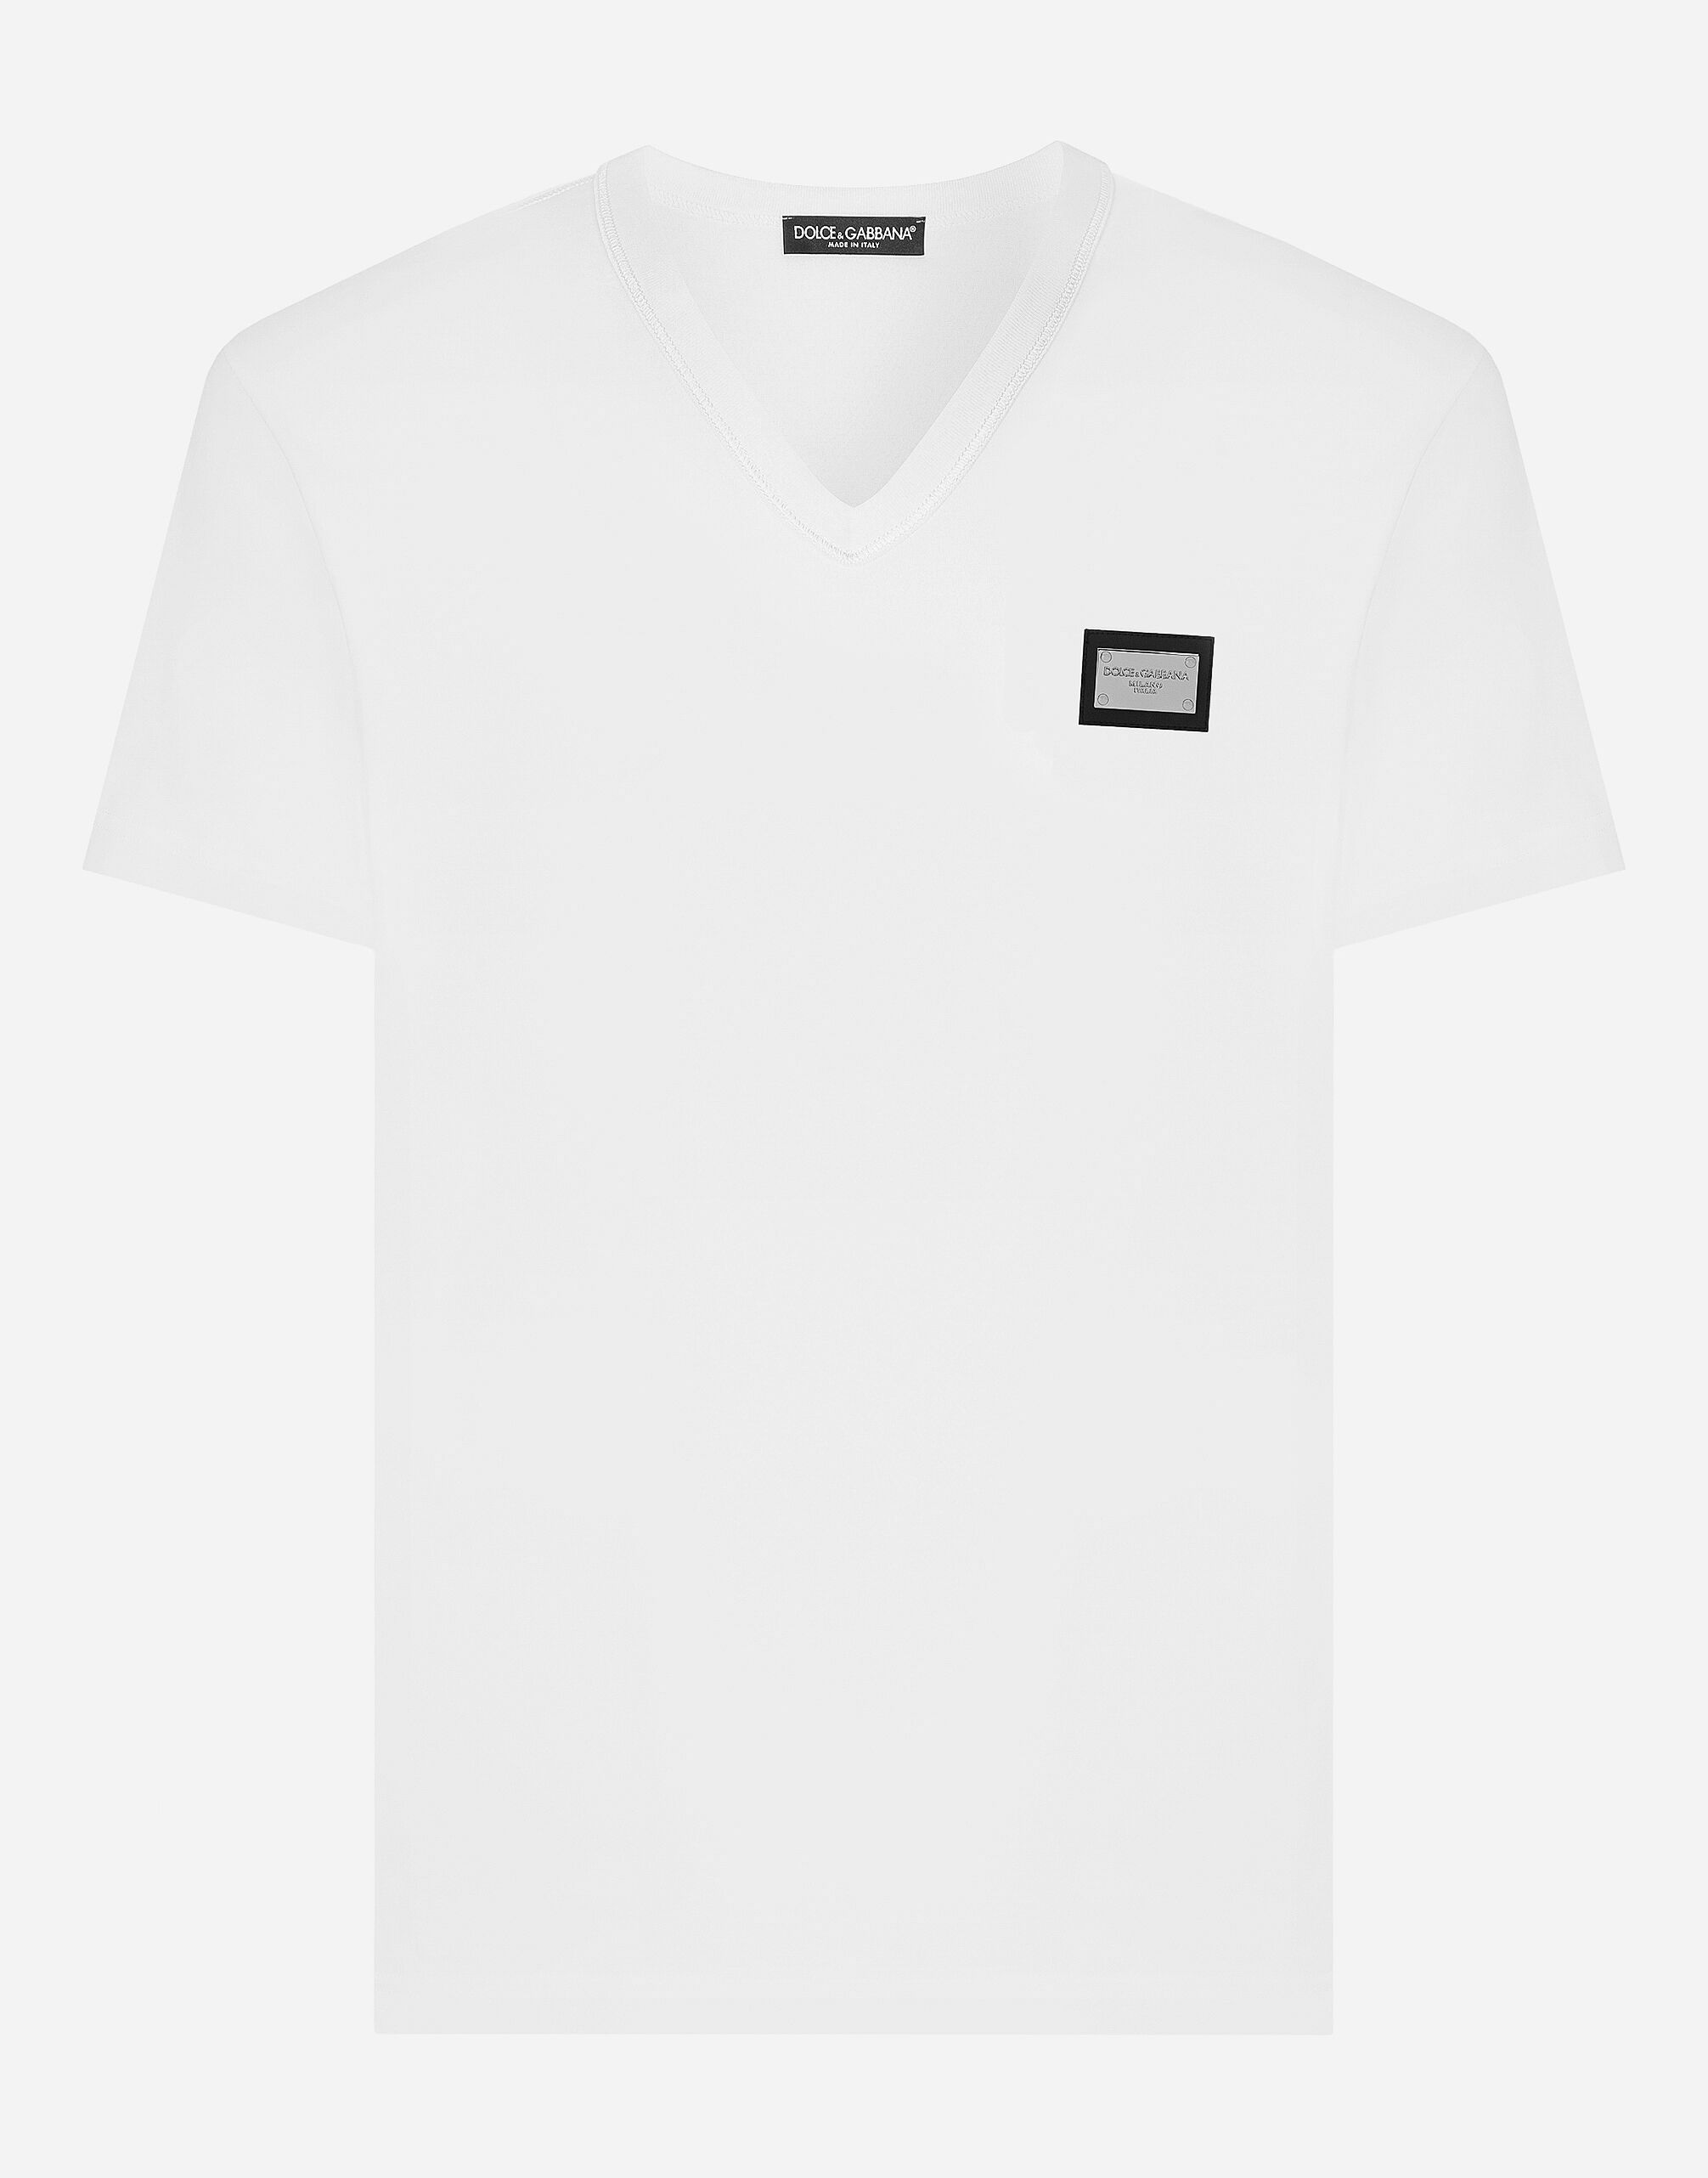 Dolce&Gabbana Cotton V-neck T-shirt with branded tag Black BM2123AQ437